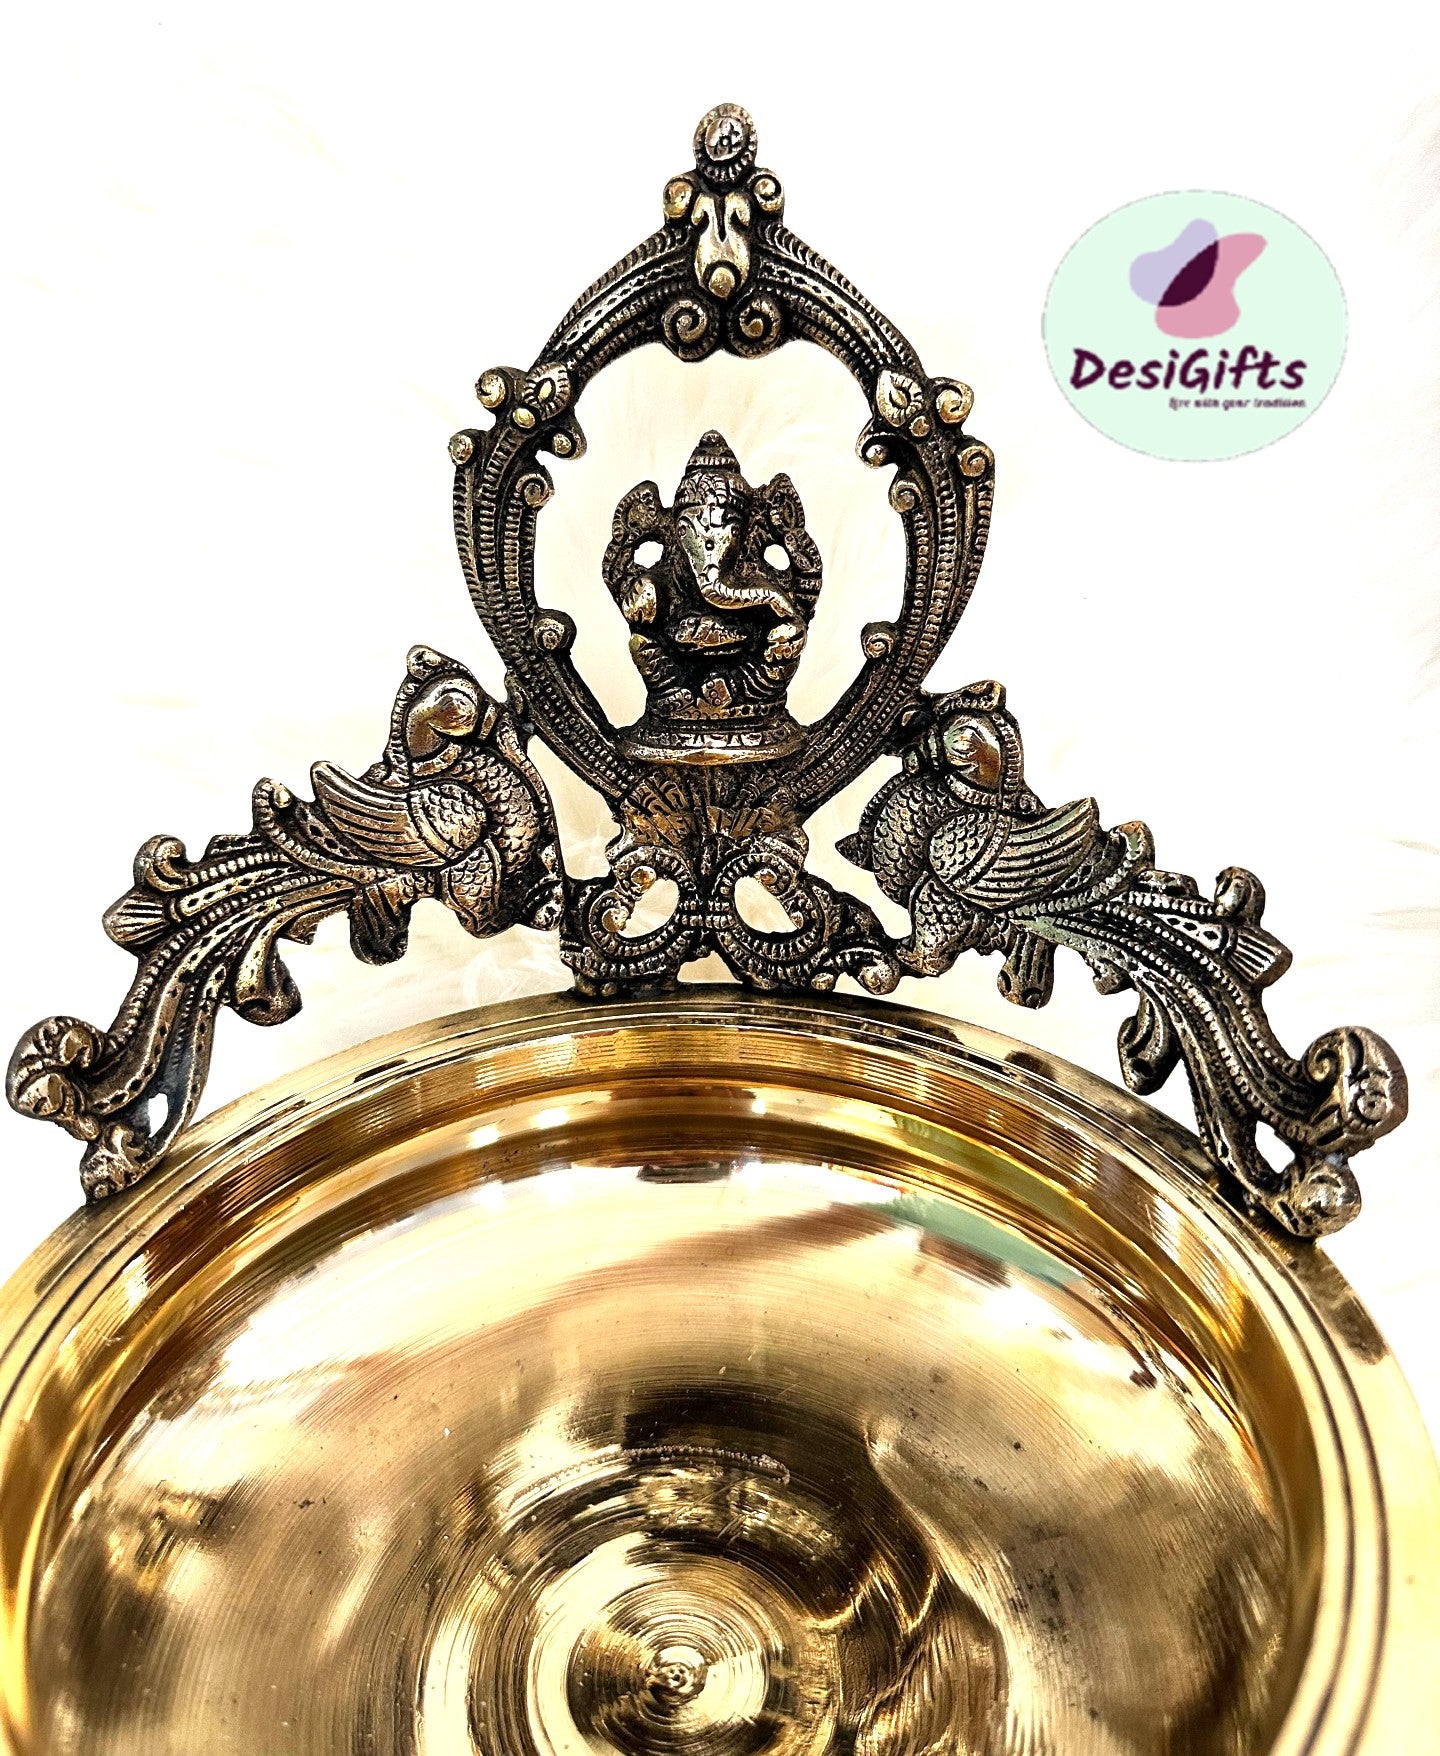 12 Inch Ganesha urli with Bell and Diya in Brass Antique Finish, UBB - 1046